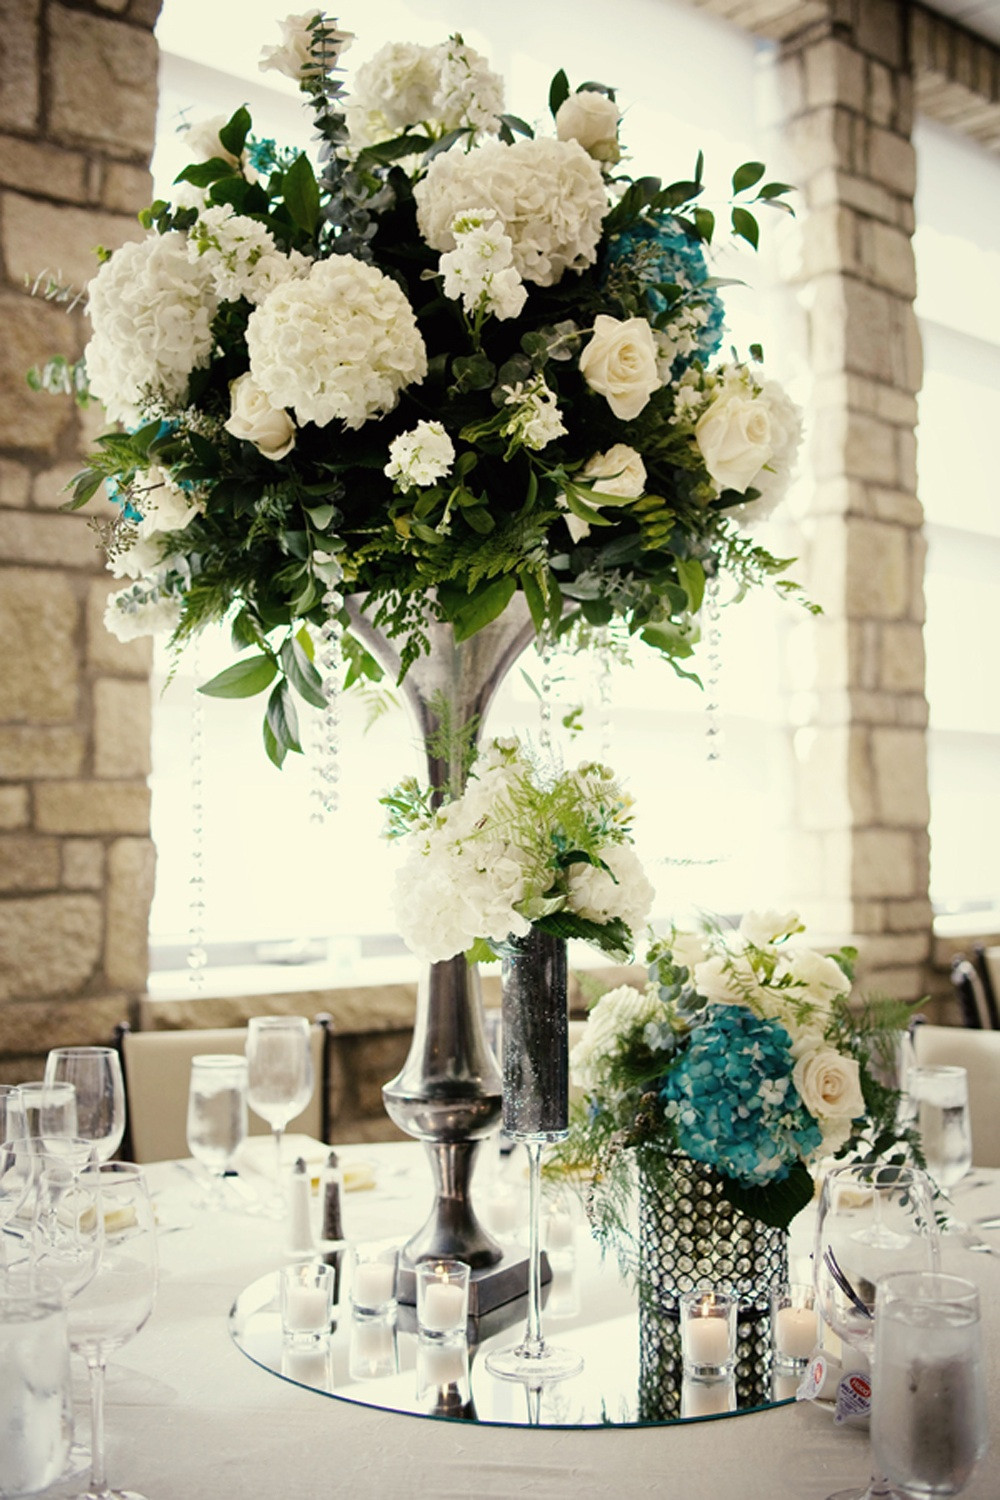 Wedding-flowers-and-reception-ideas
 Reception Centerpieces